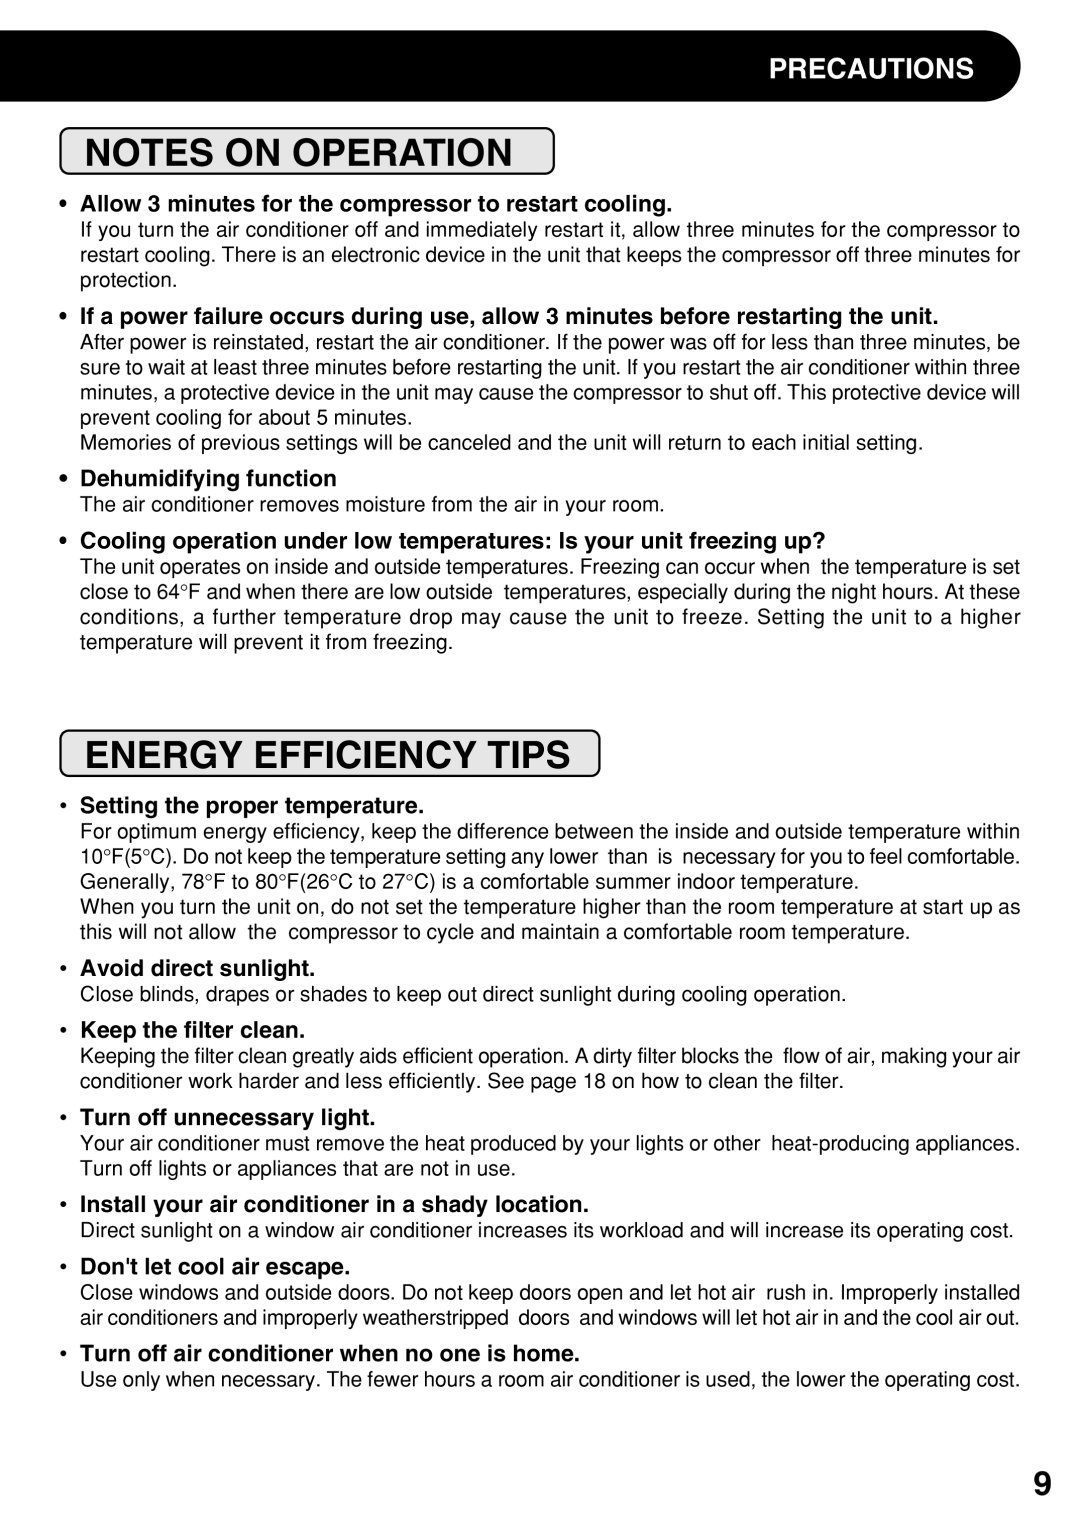 Sharp AF-R140DX, AF-S100DX, AF-S120DX, AF-R120DX, AF-100DX Notes On Operation, Energy Efficiency Tips, Precautions 